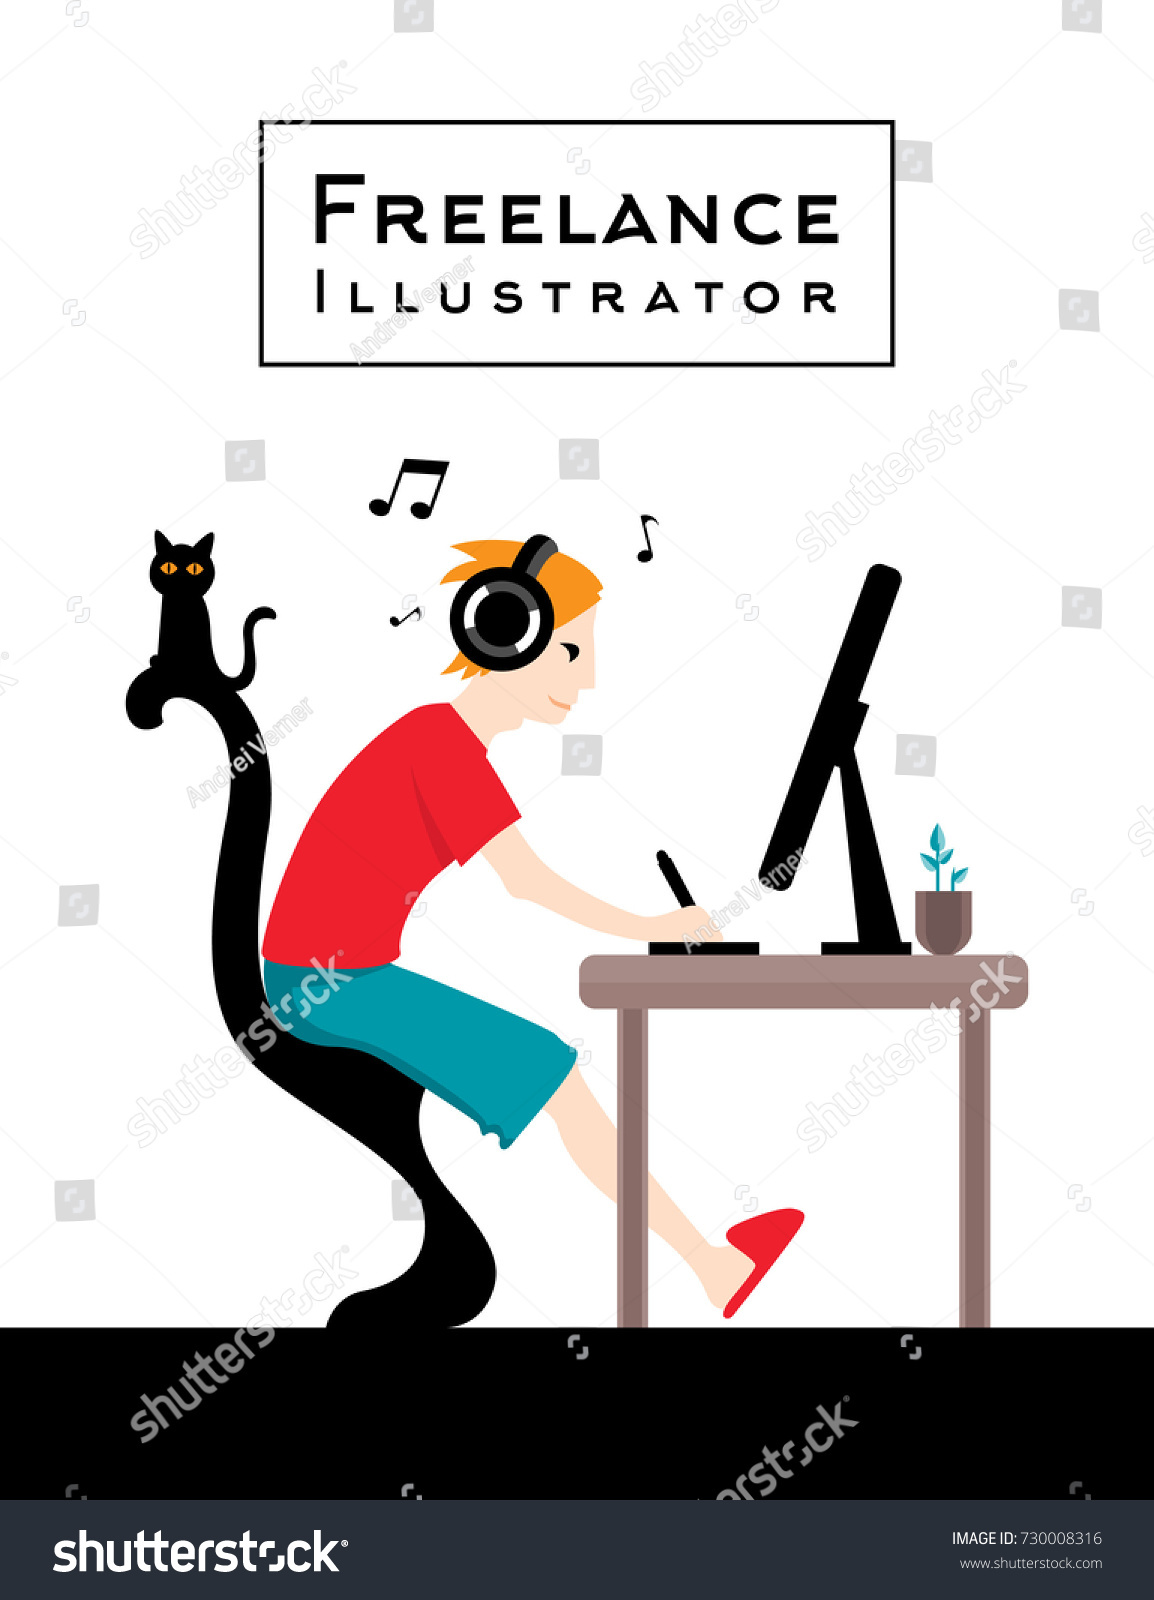 Freelance Illustrator Design Character Dude Work Stock Vector Royalty Free 730008316